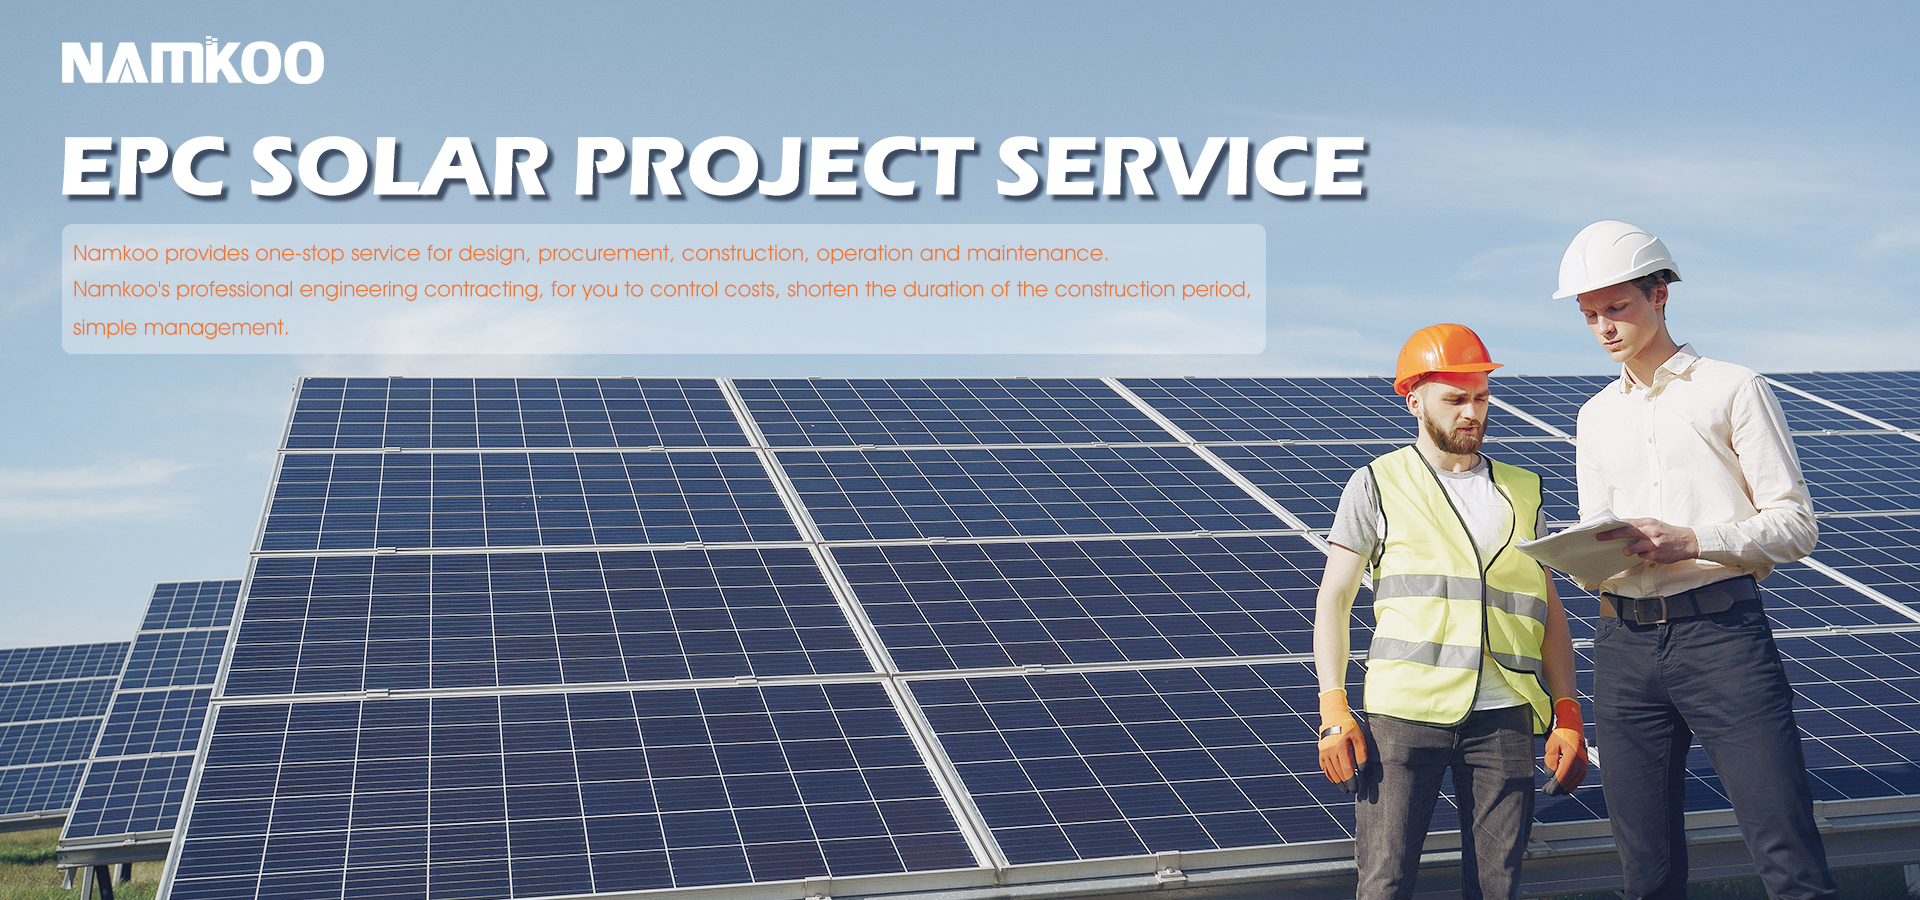 Namkoo EPC Solar service